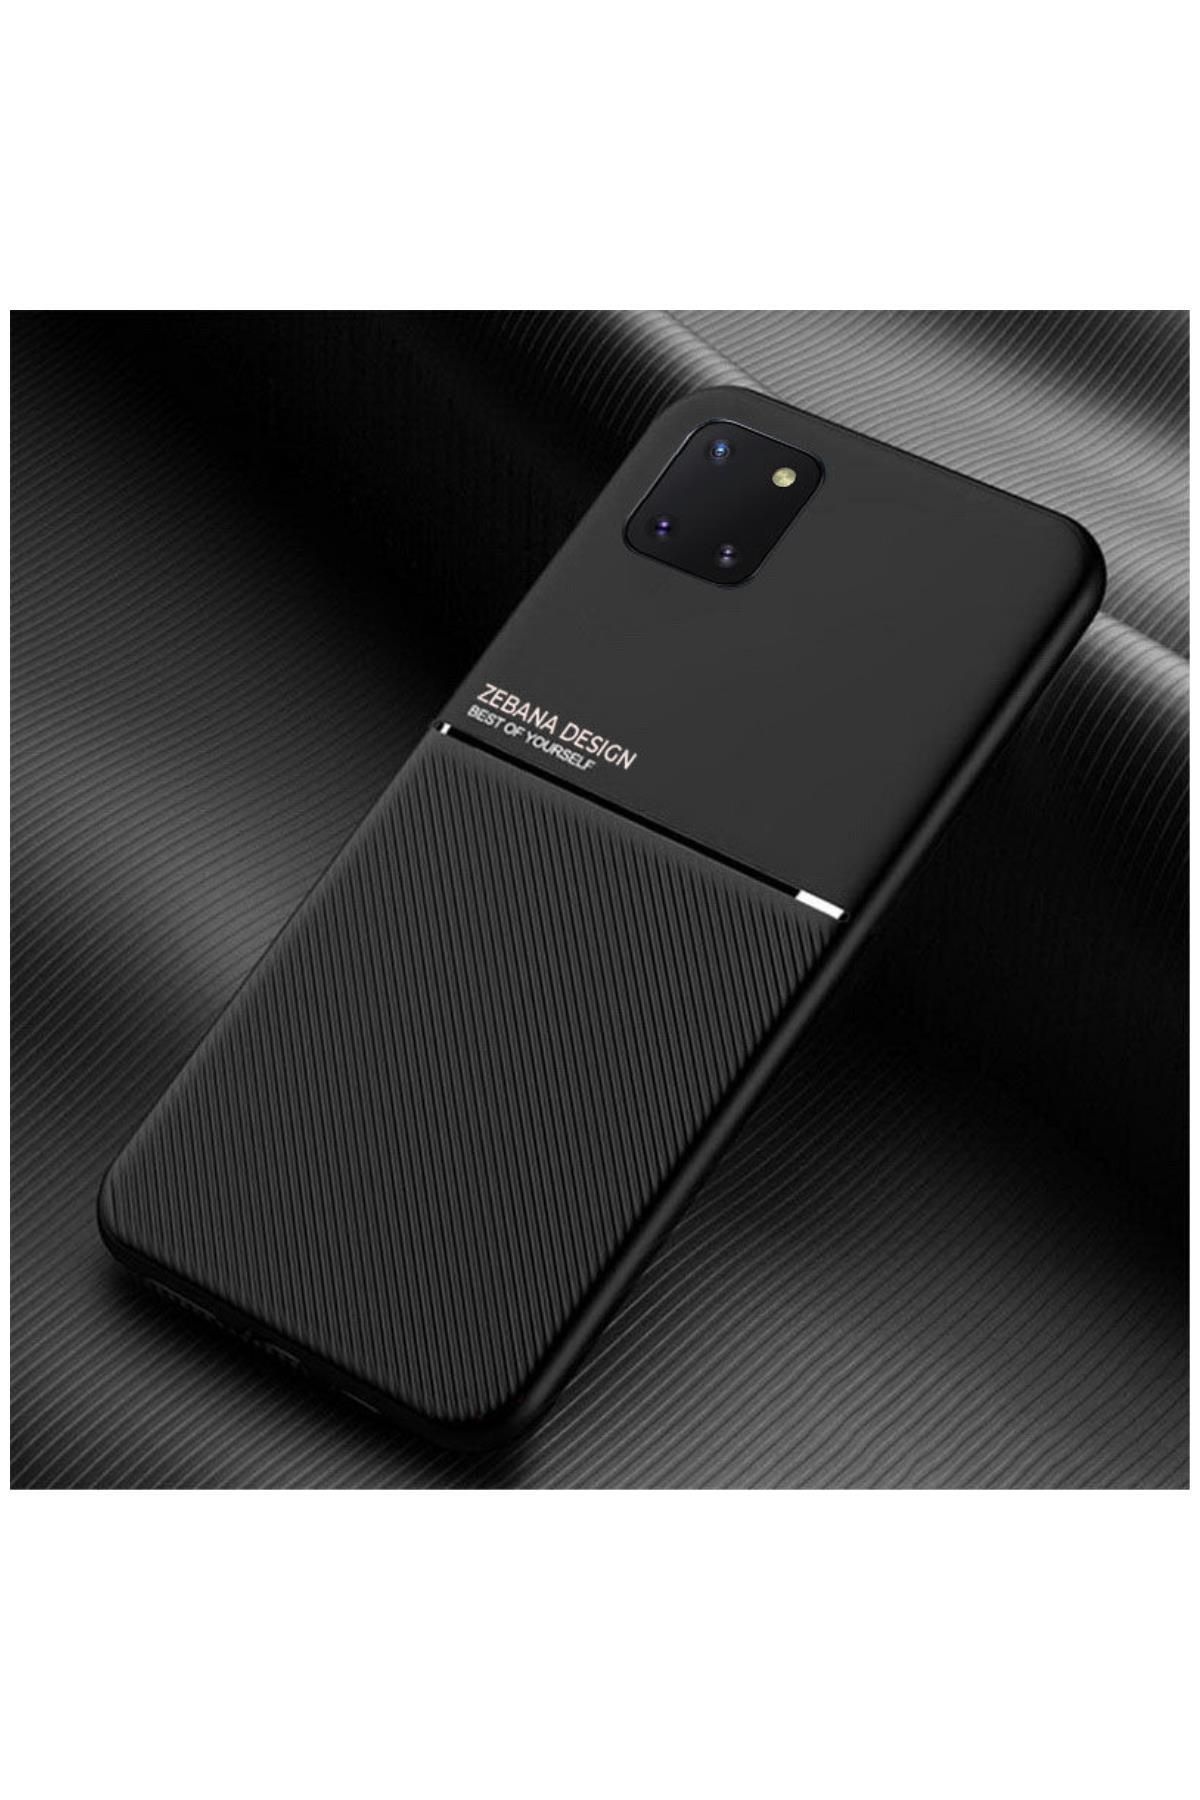 Dara Aksesuar Samsung Galaxy Note 10 Lite Uyumlu Kılıf Zebana Design Silikon Kılıf Siyah